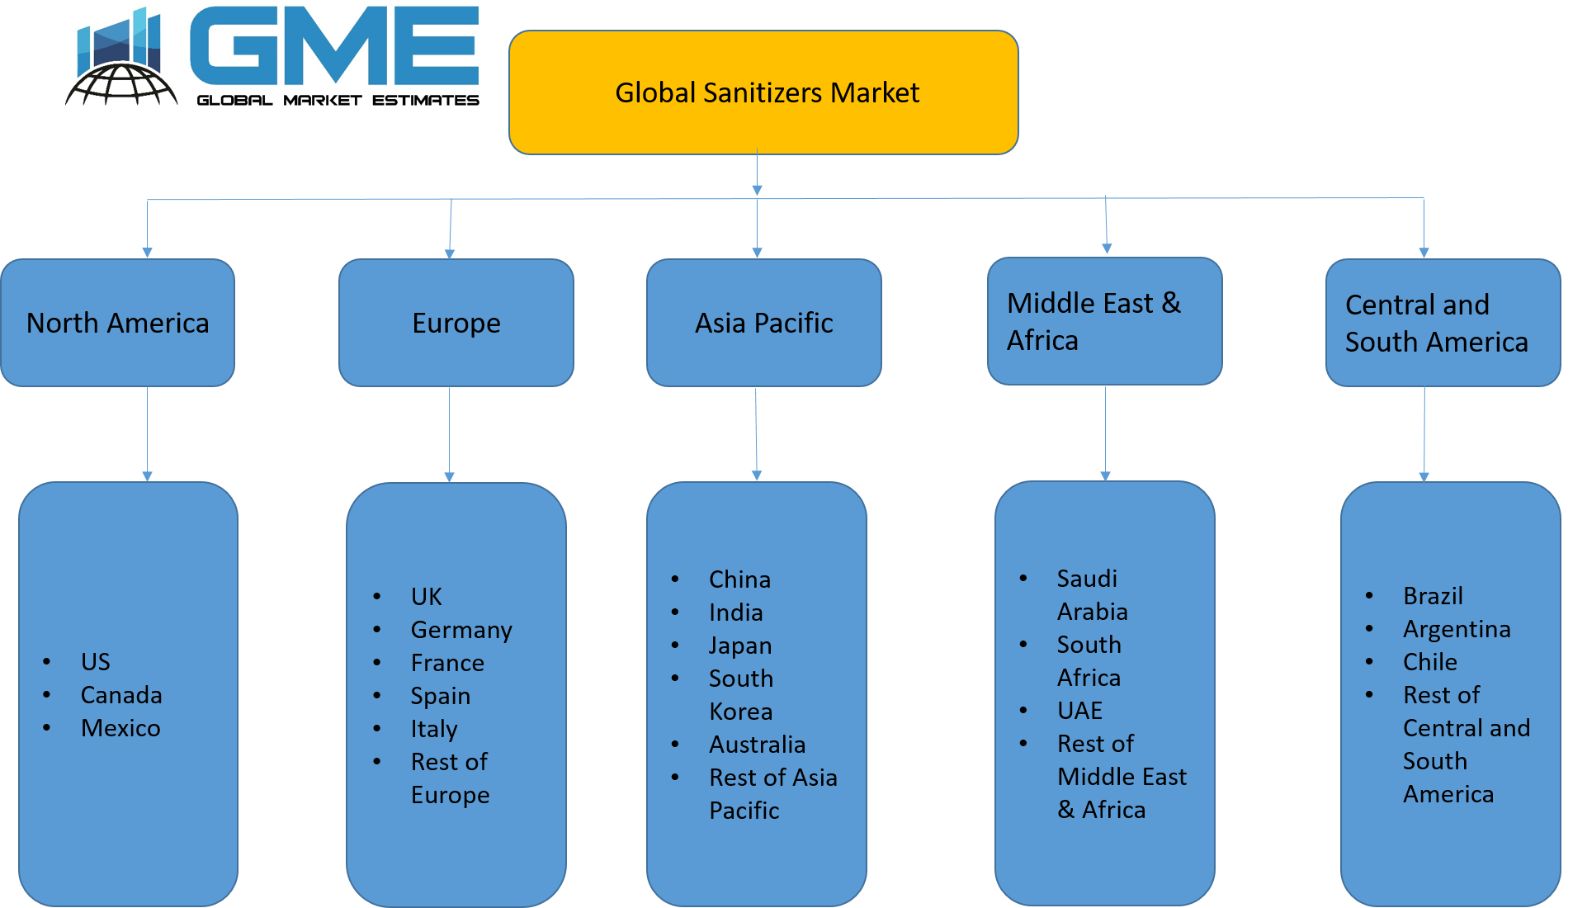 Global Sanitizers Market - Regional Analysis